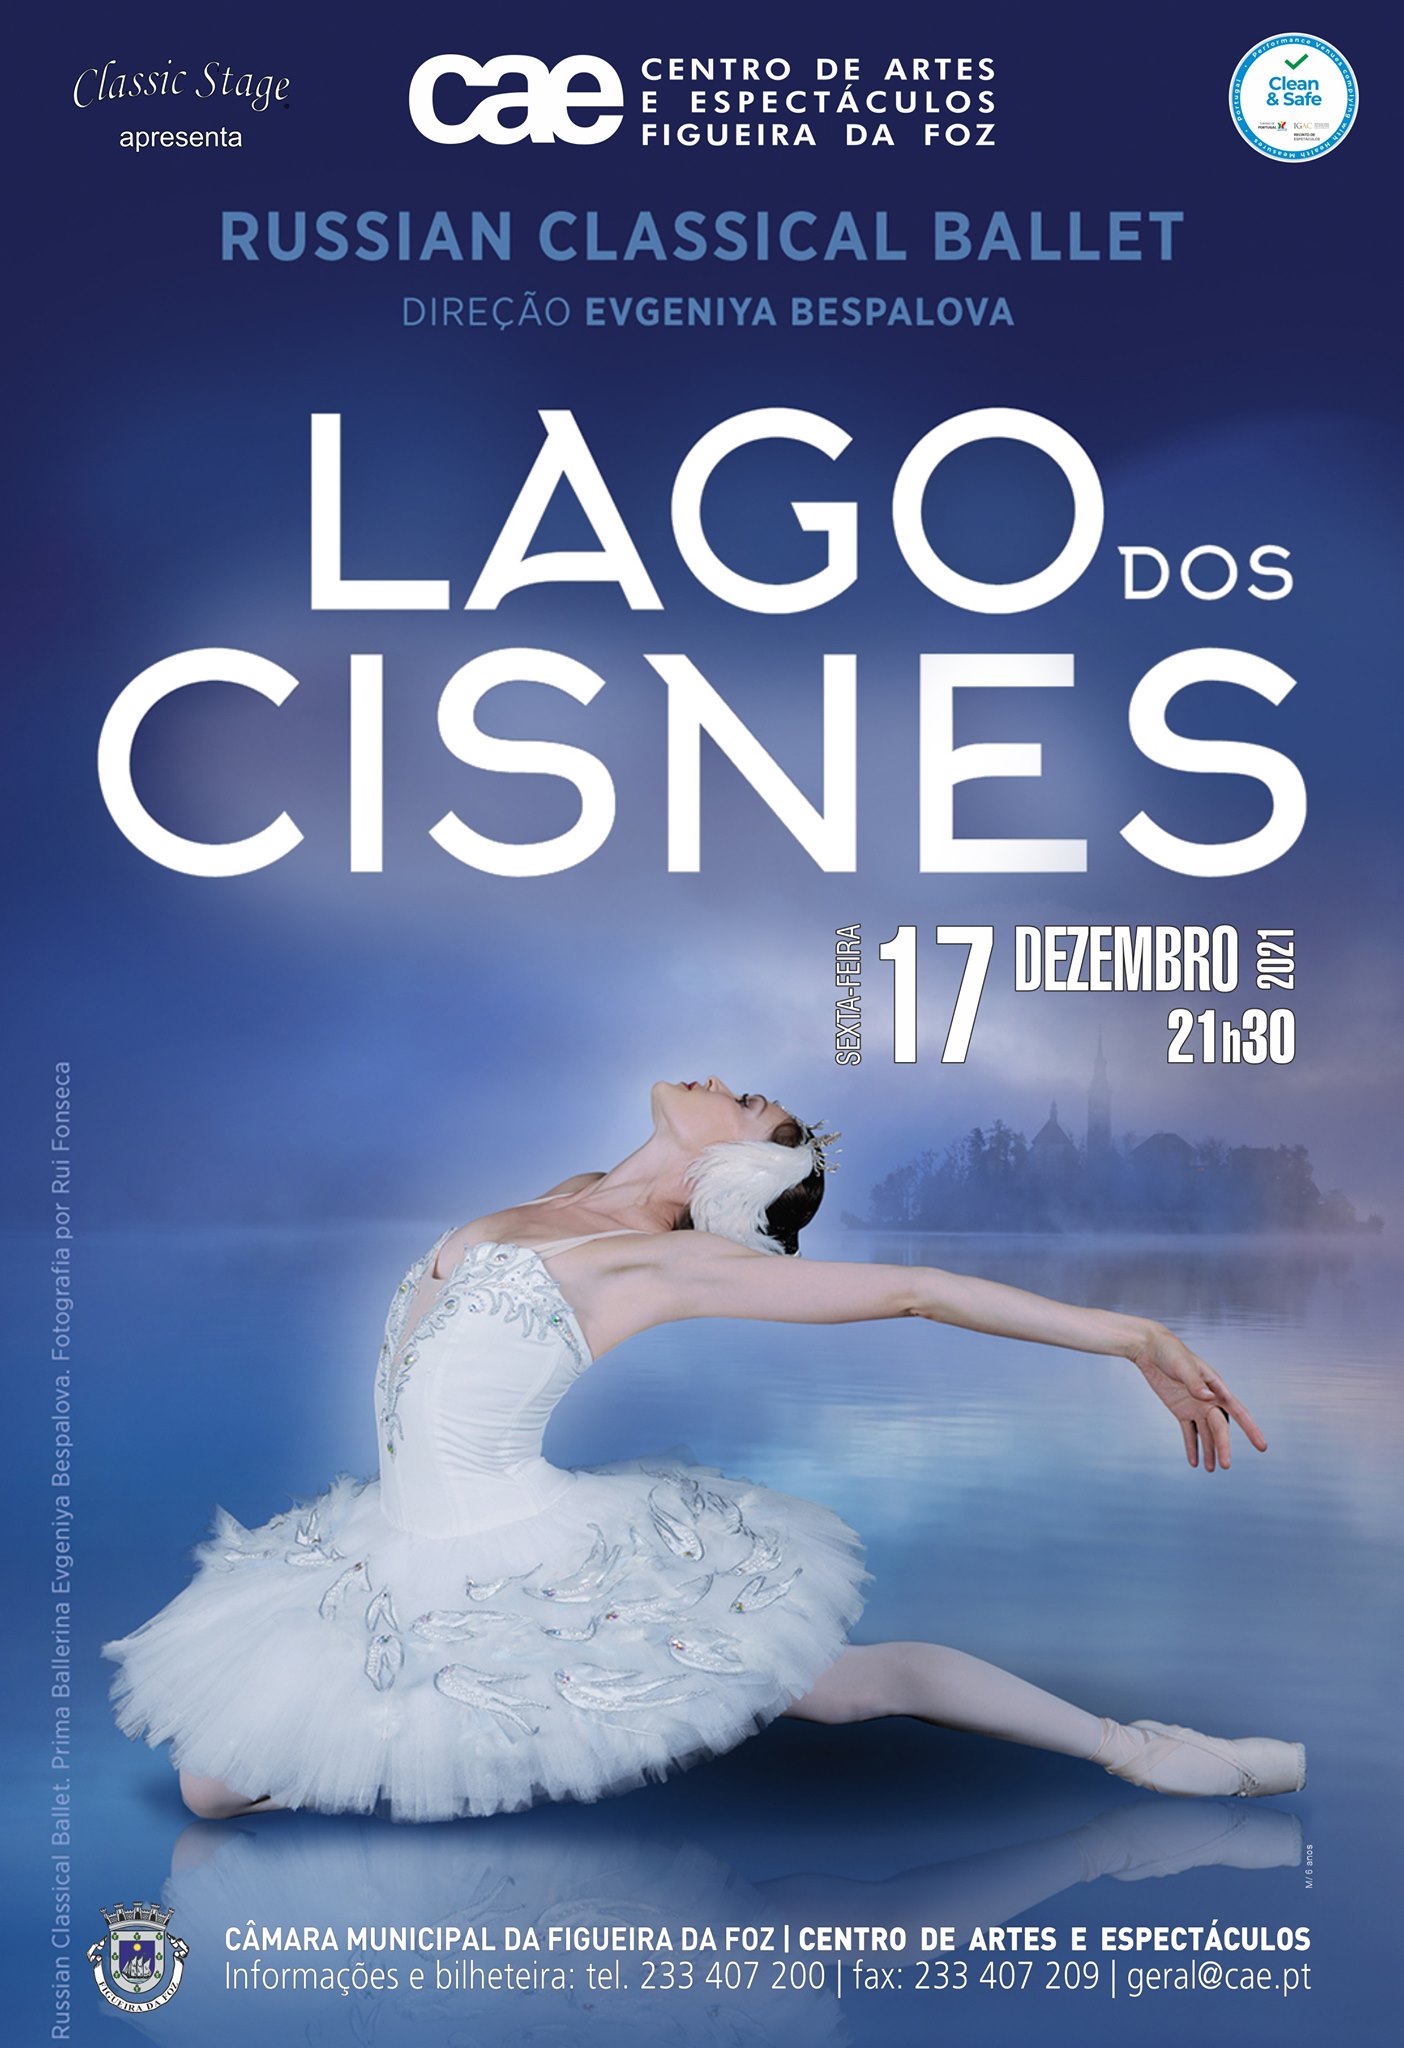 'Lago dos Cisnes', Russian Classical Ballet